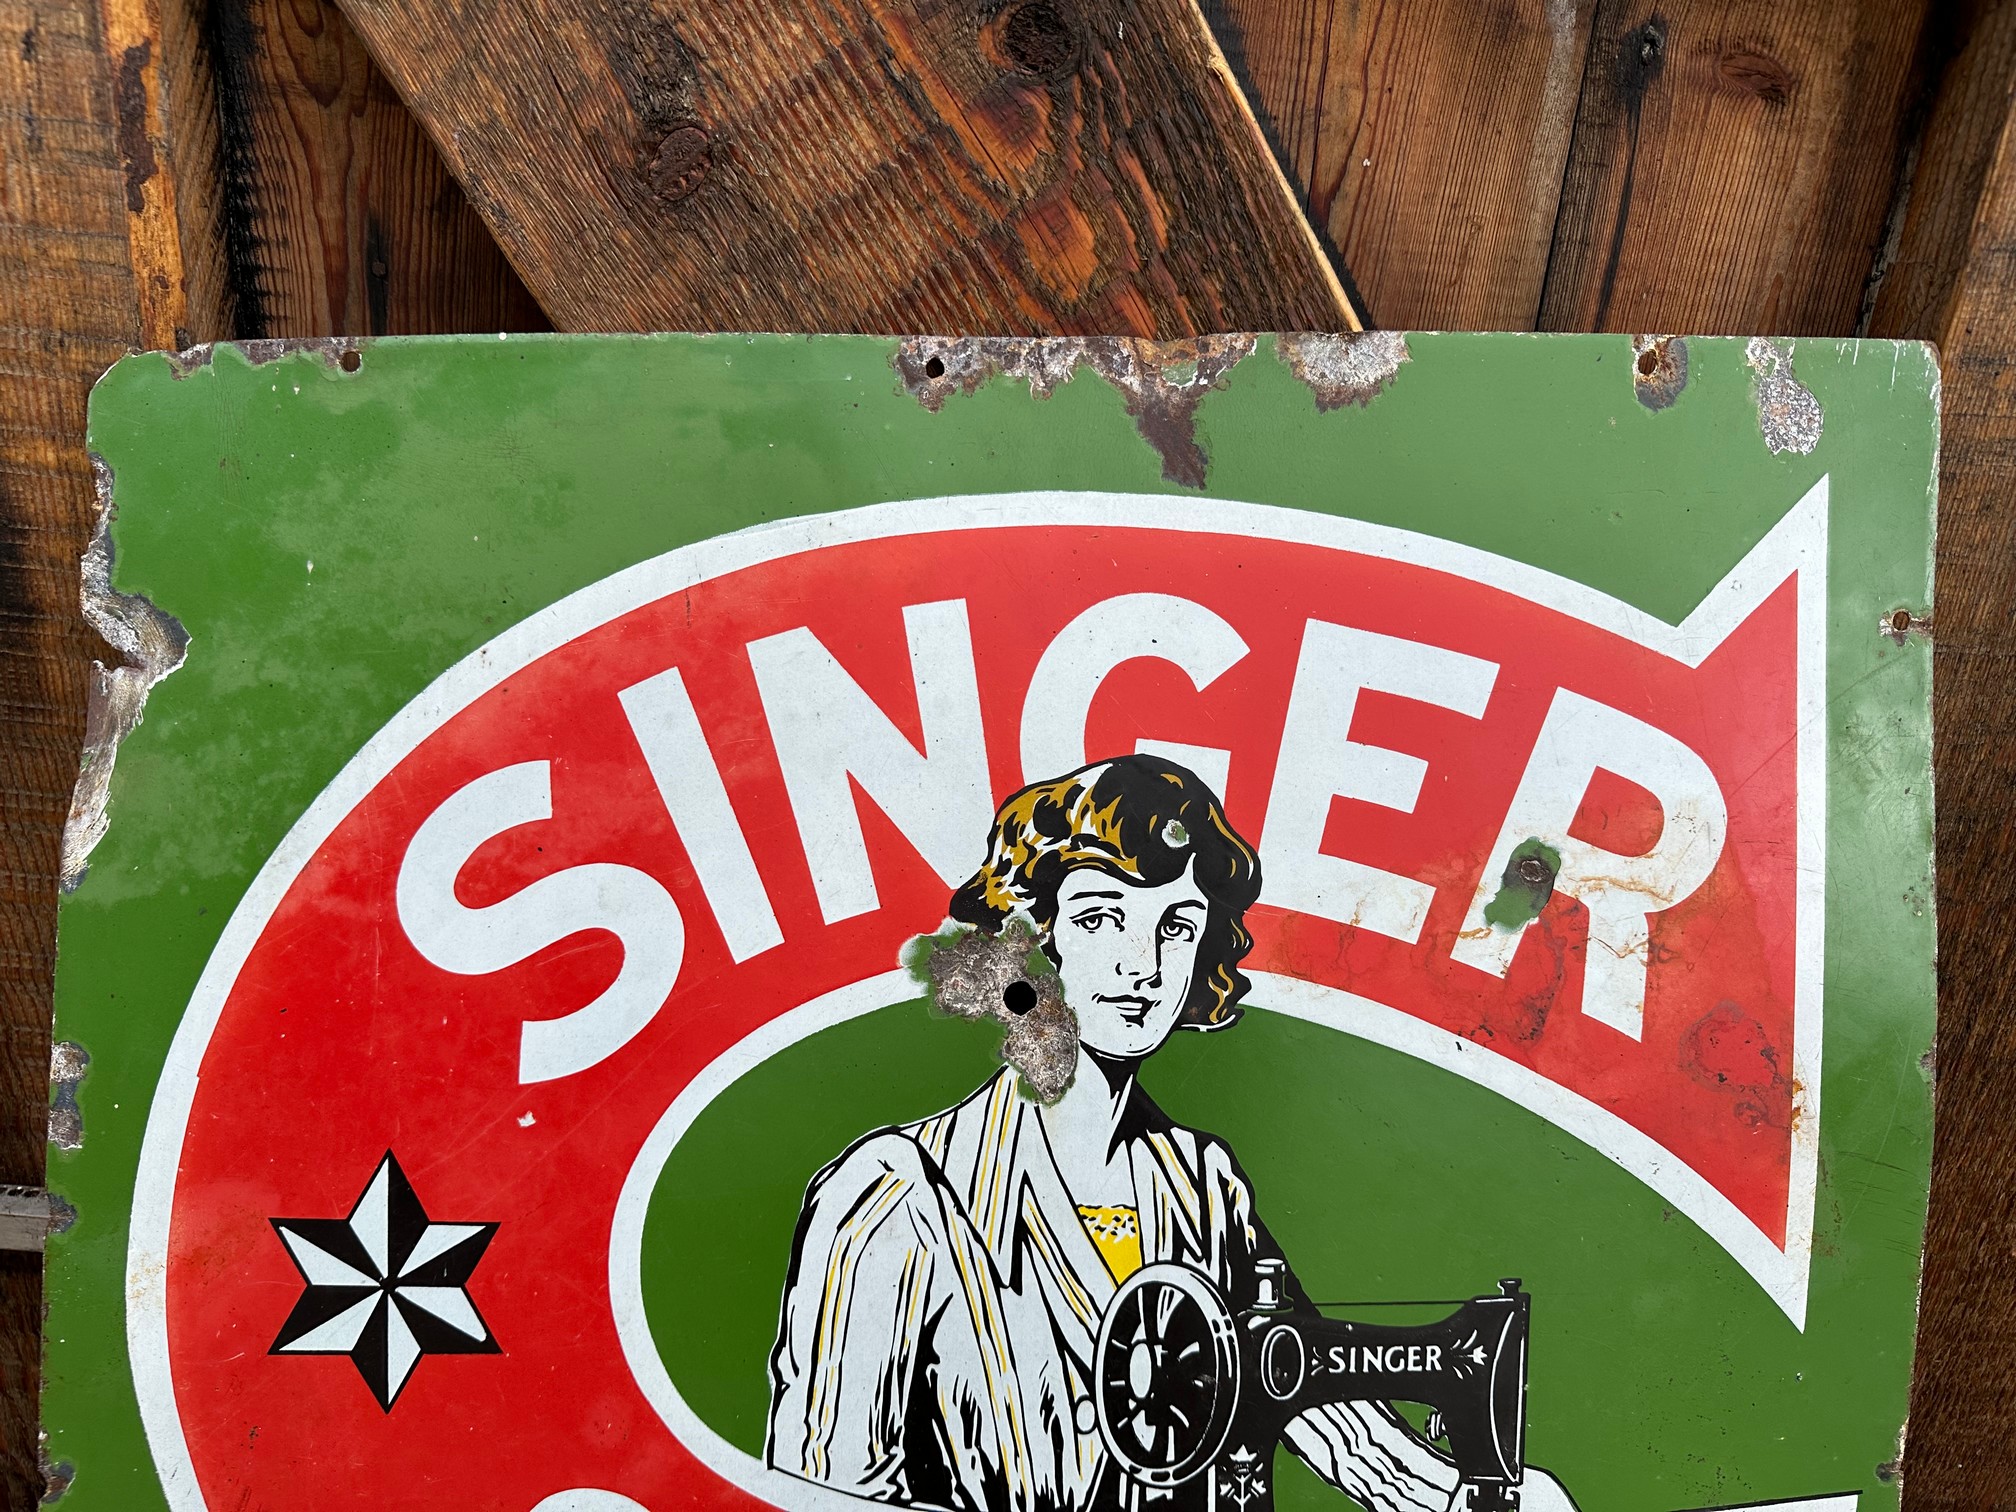 A Singer Sewing Machines enamel advertising sign by Cooper Bond Ltd. London SE16, 24 x 36". - Image 3 of 5